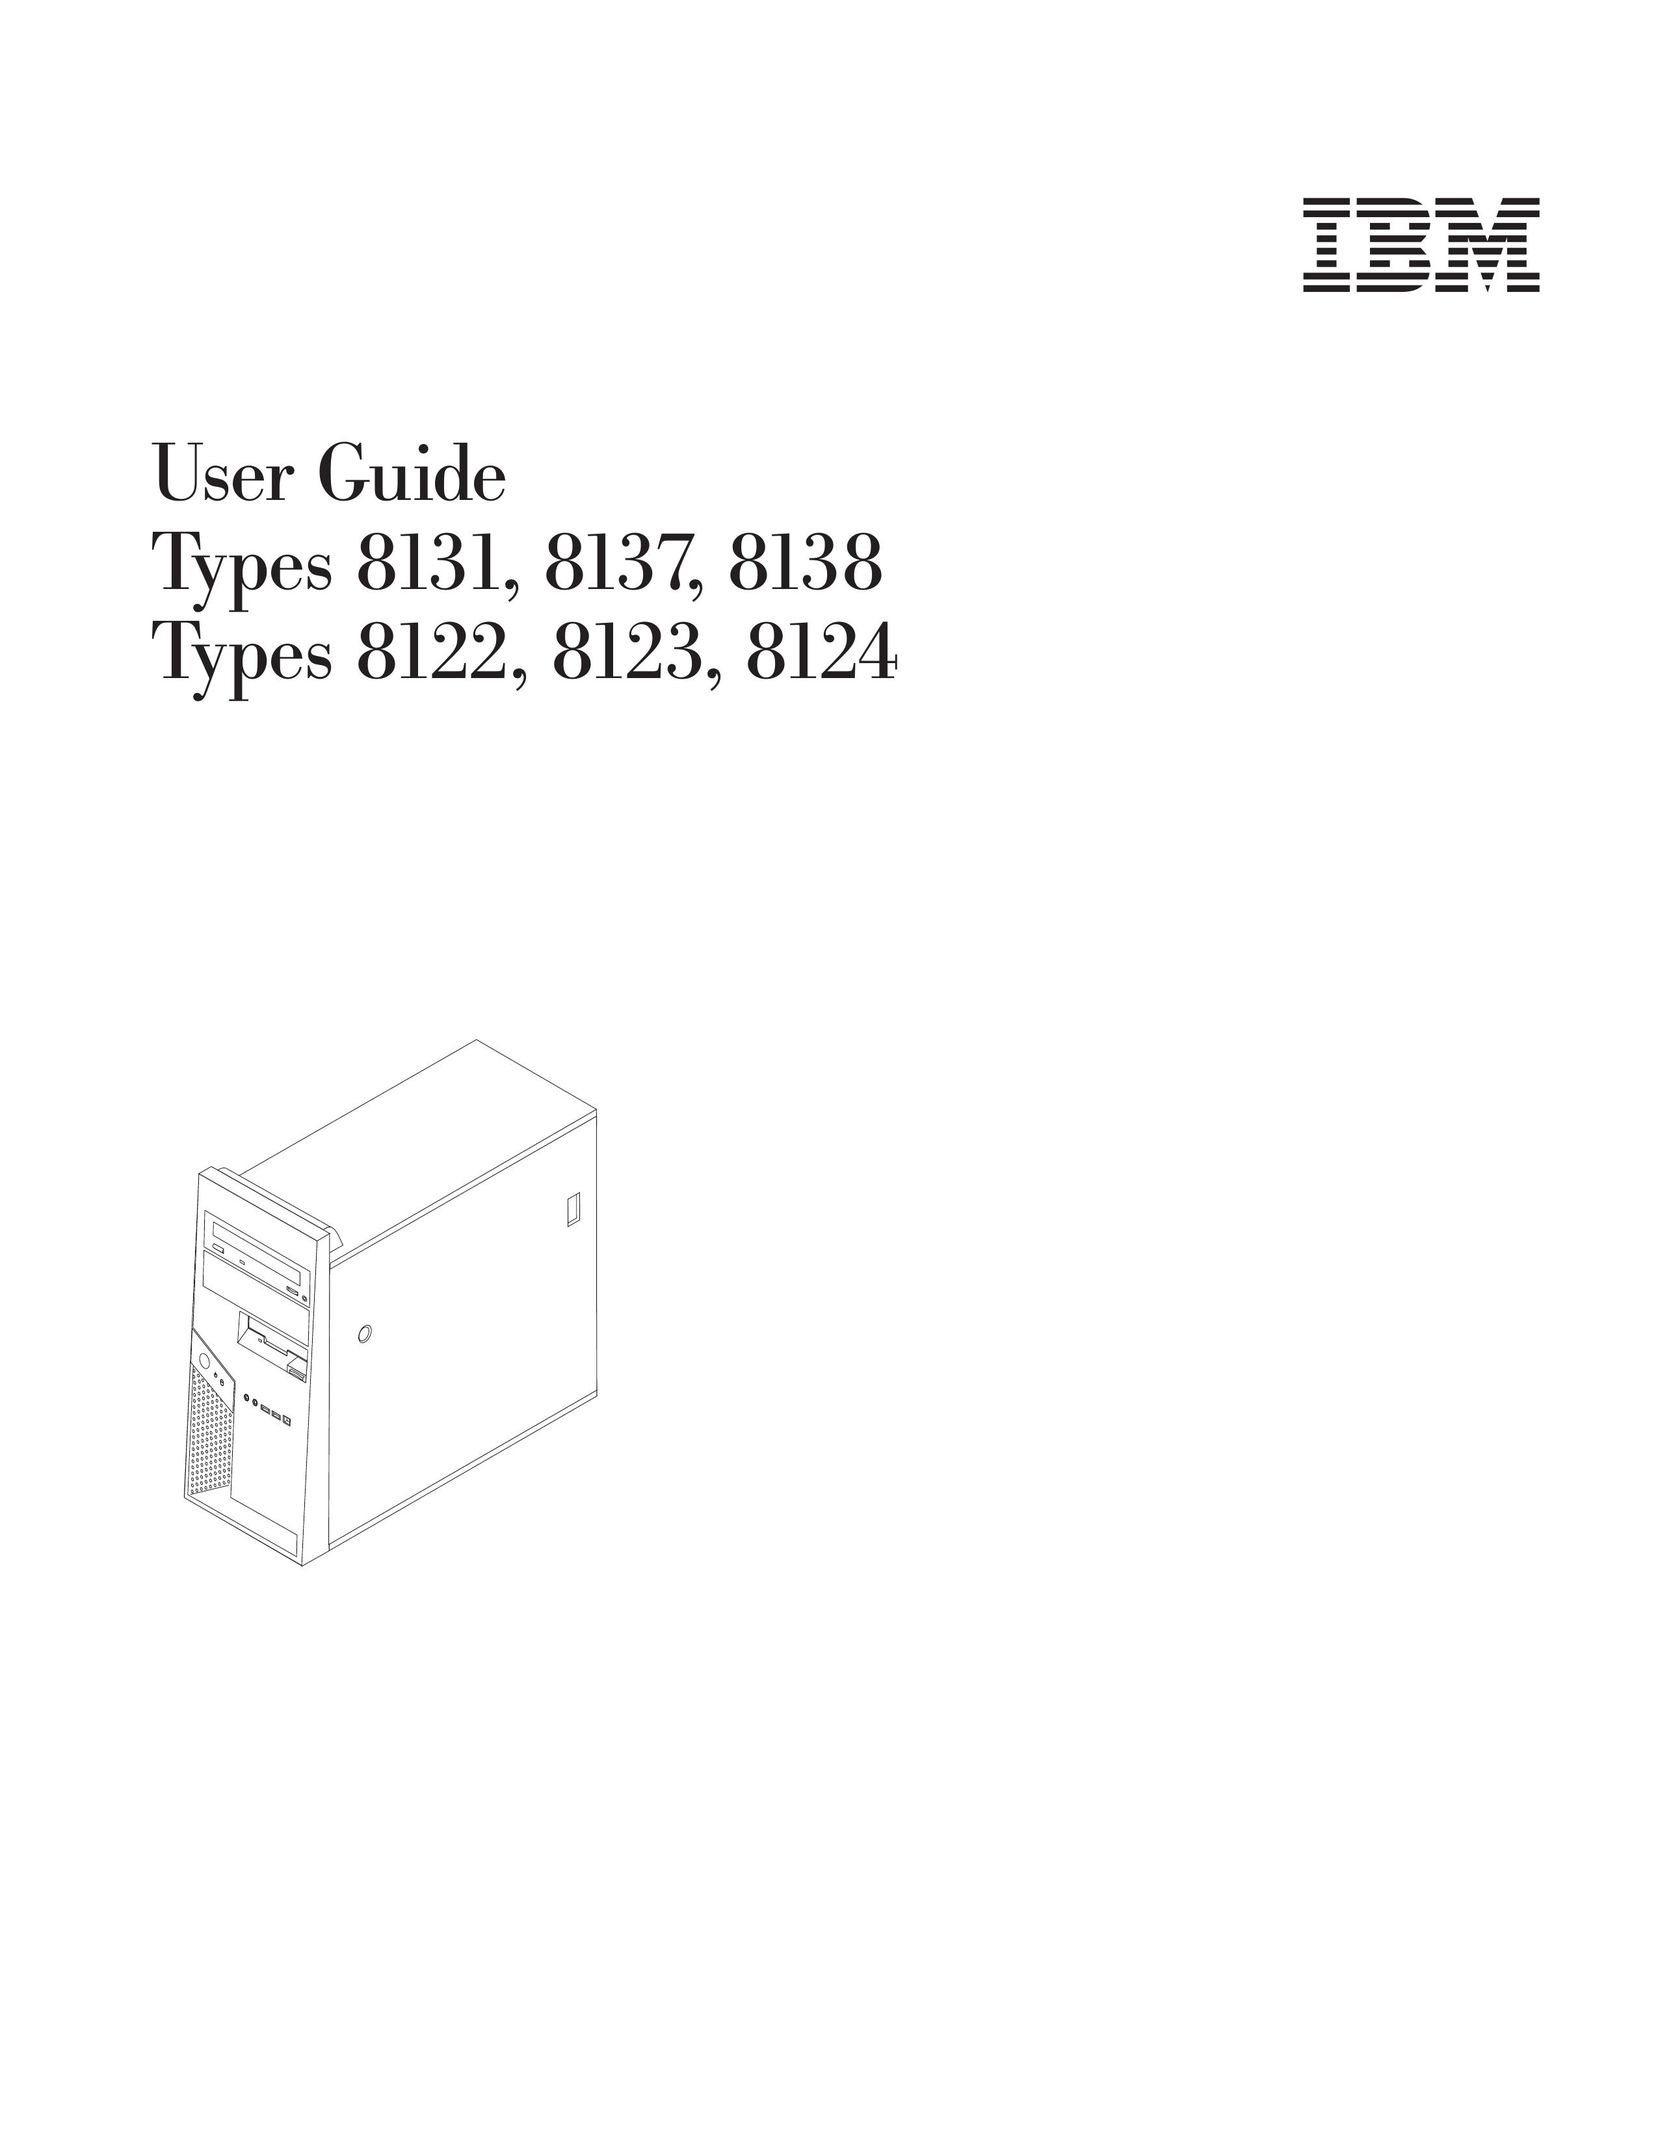 IBM Partner Pavilion 8122 Personal Computer User Manual